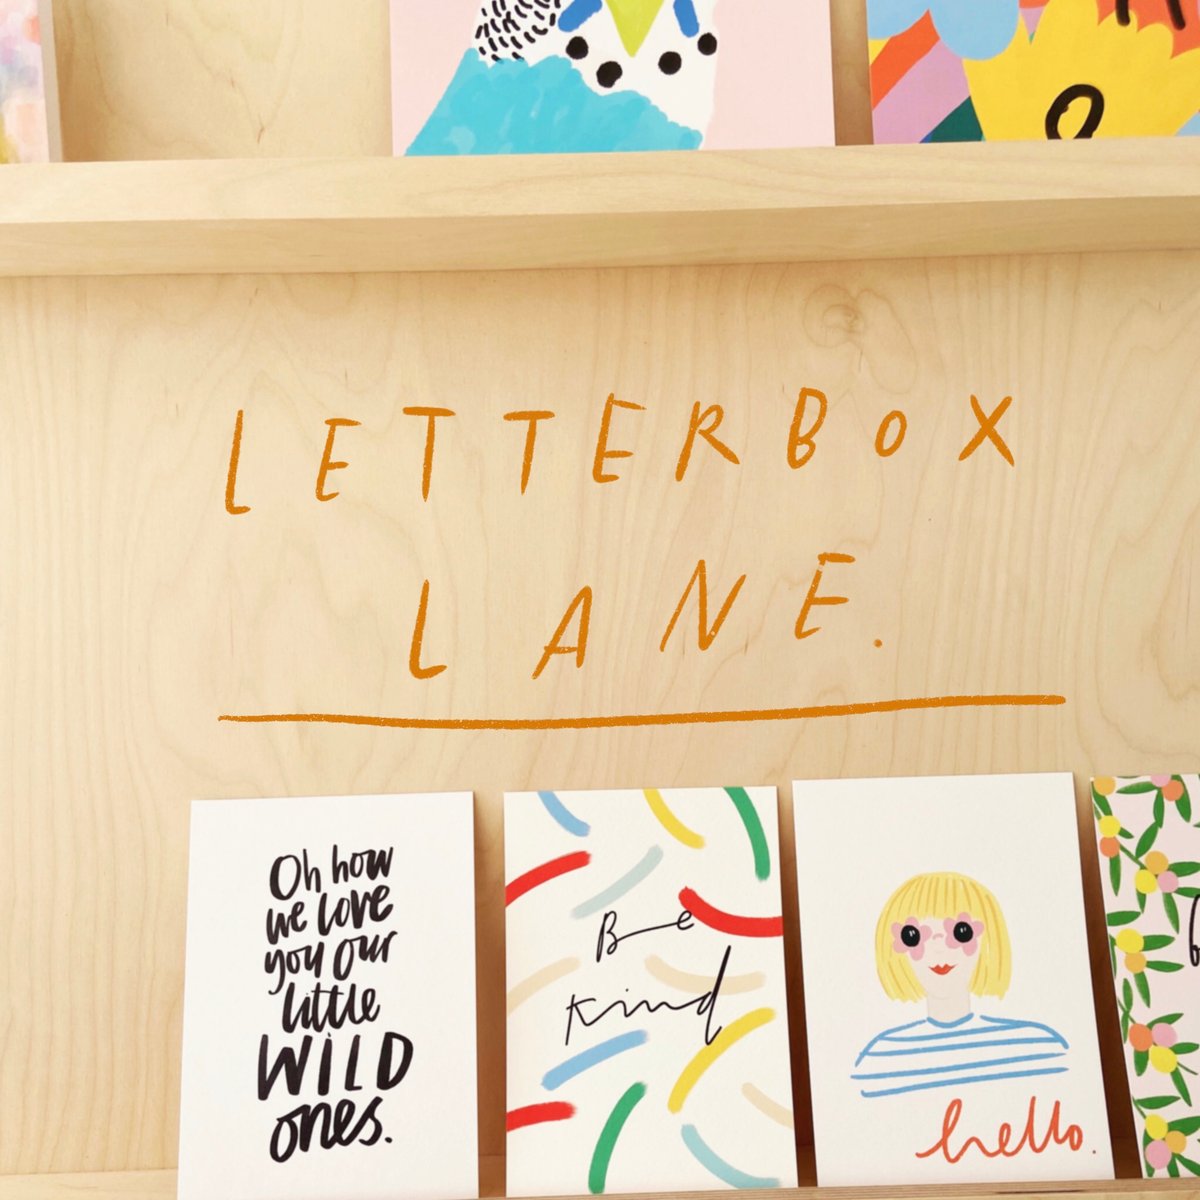 Letterbox Lane